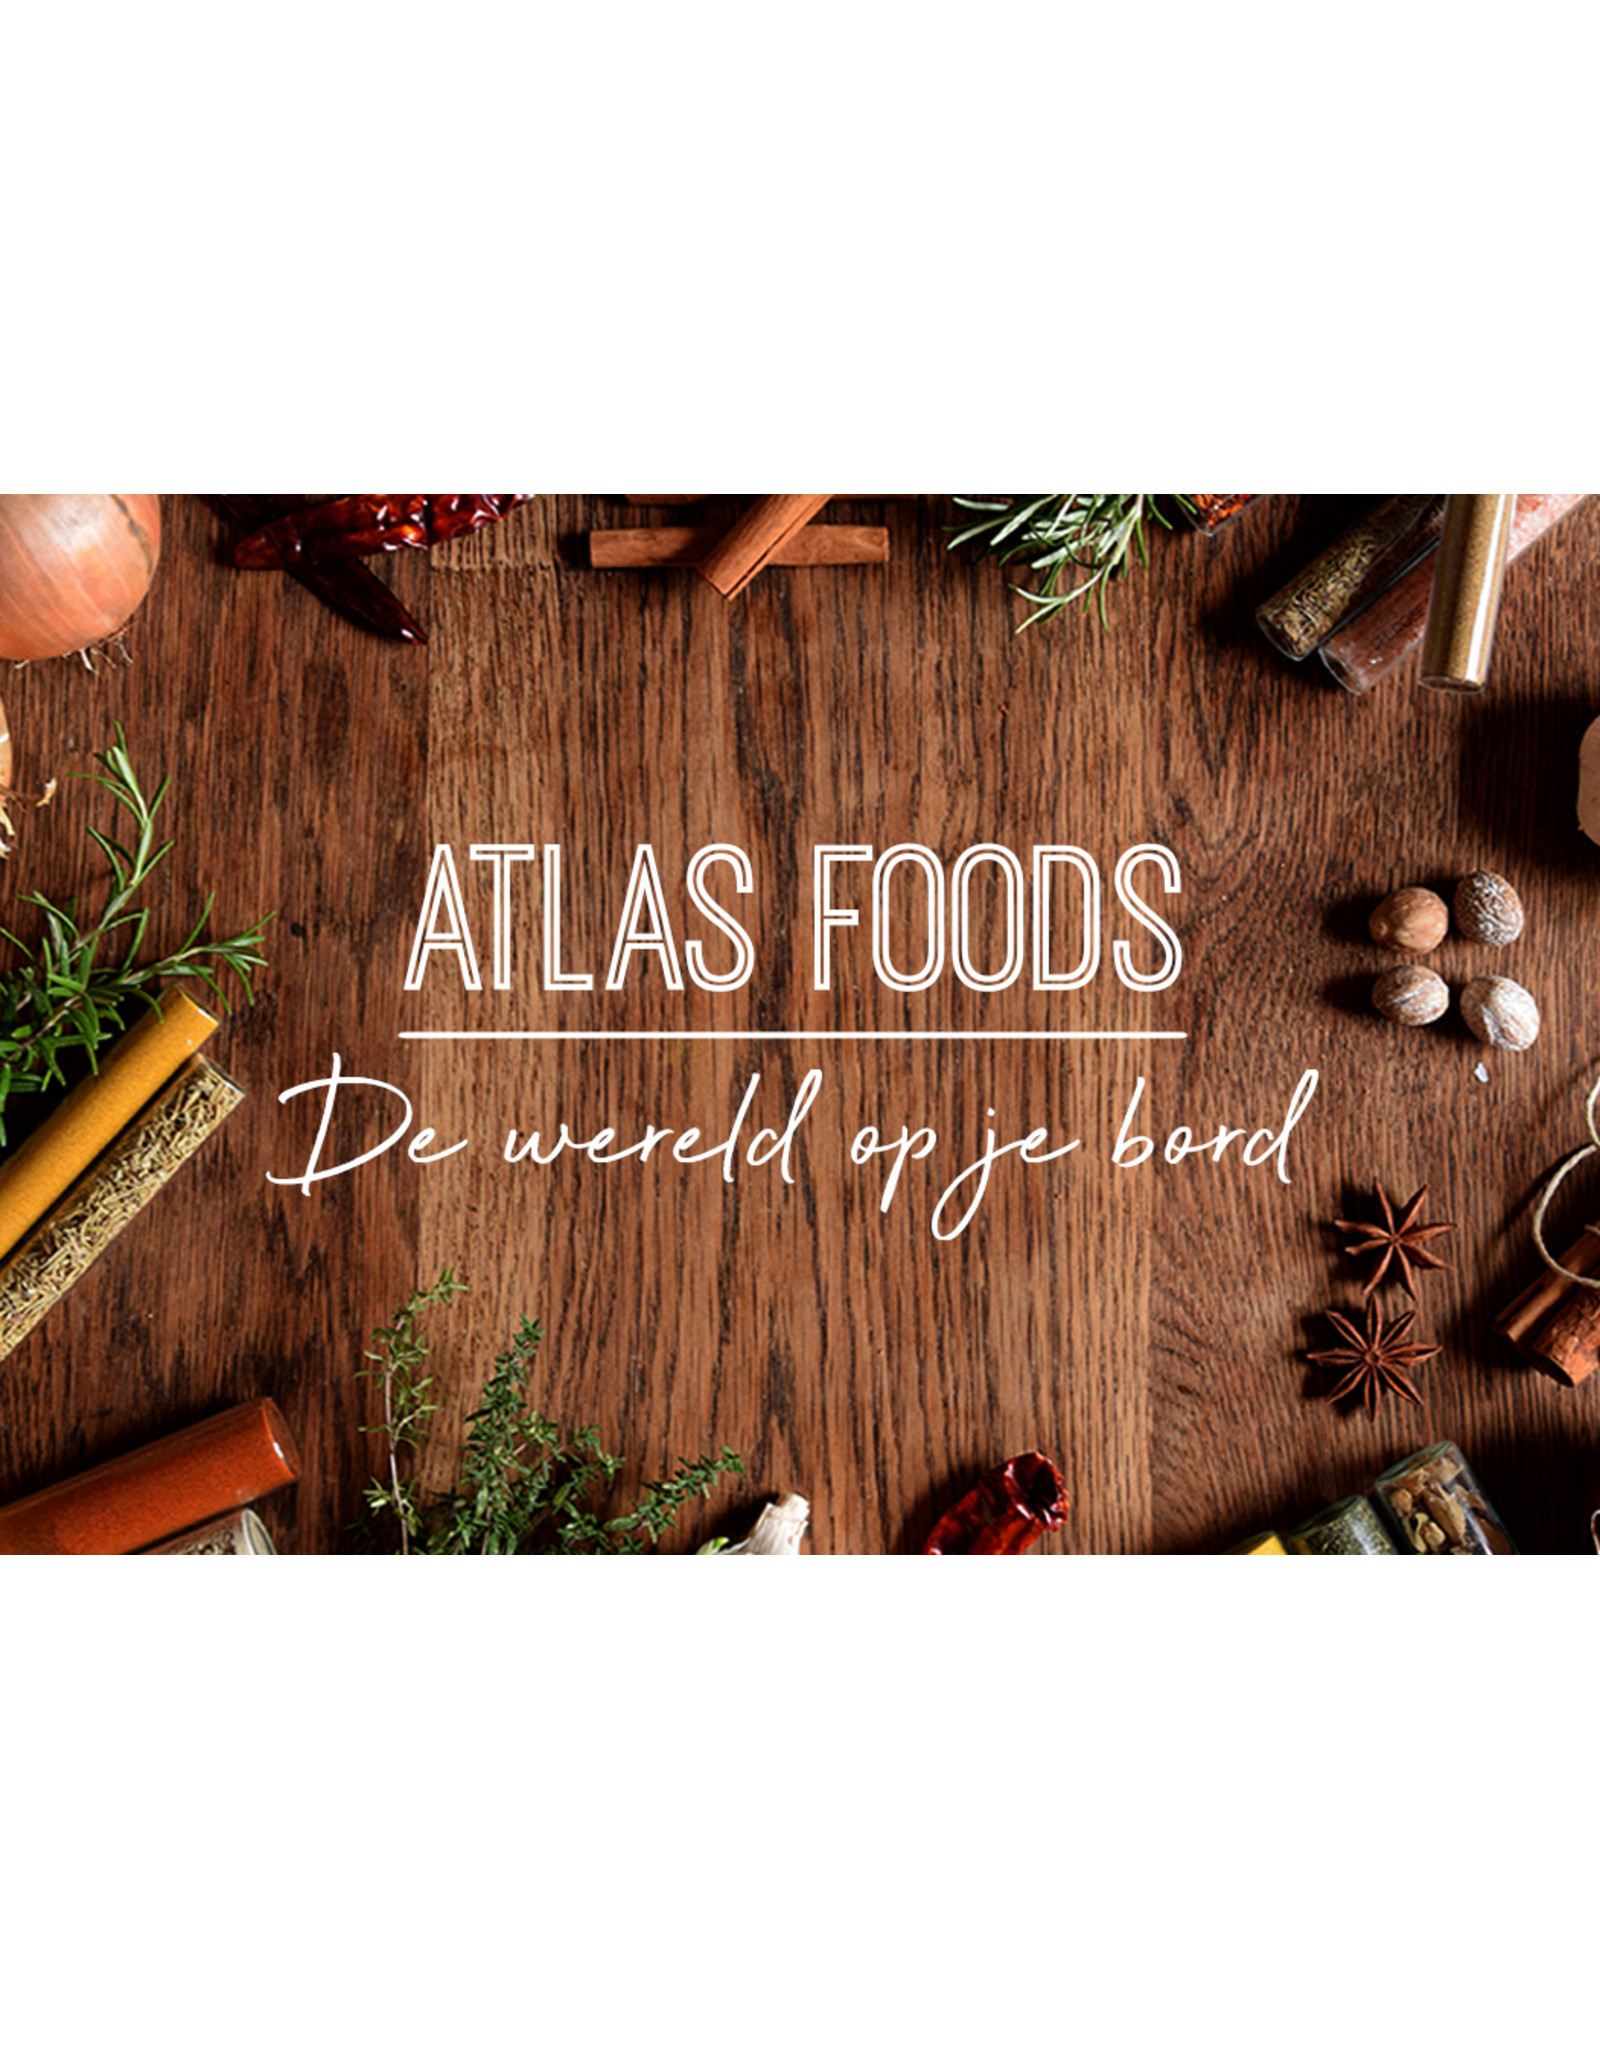 Apero box - Atlas Foods